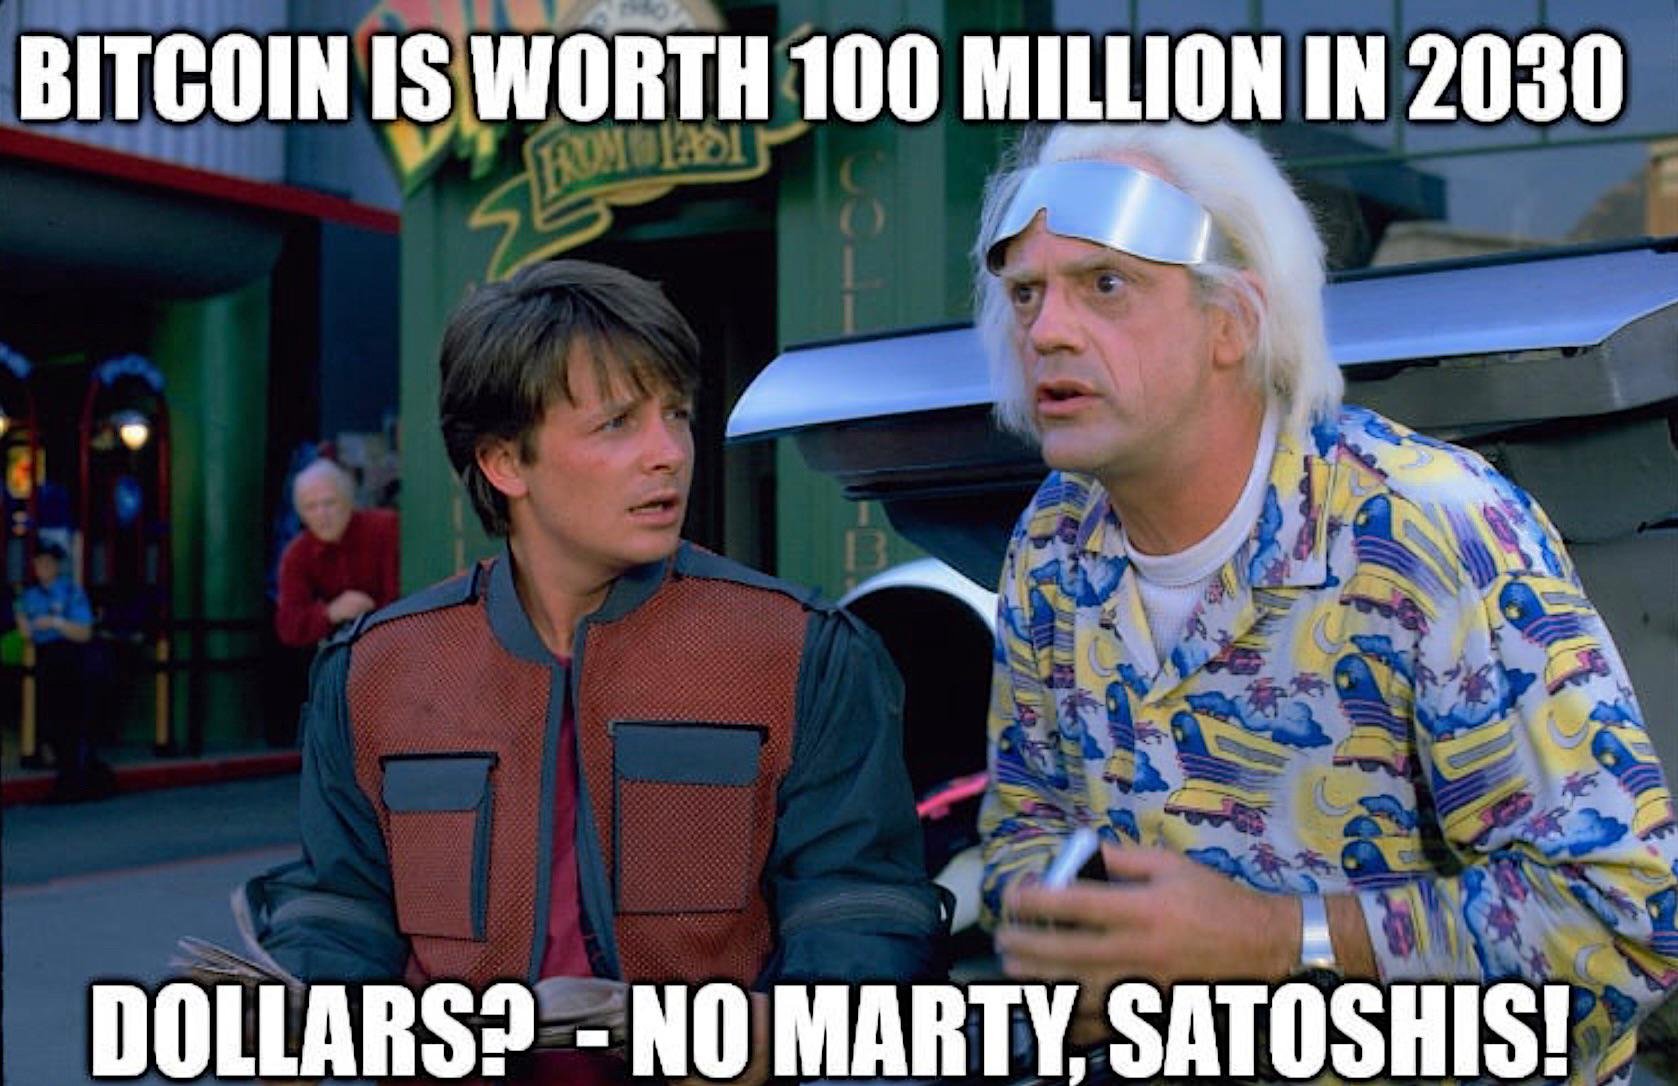 BITCOIN ISWORTH100 MILLION IN 2030
T aAy E
DOLLARS? - NO MARTY SATOSHIS!